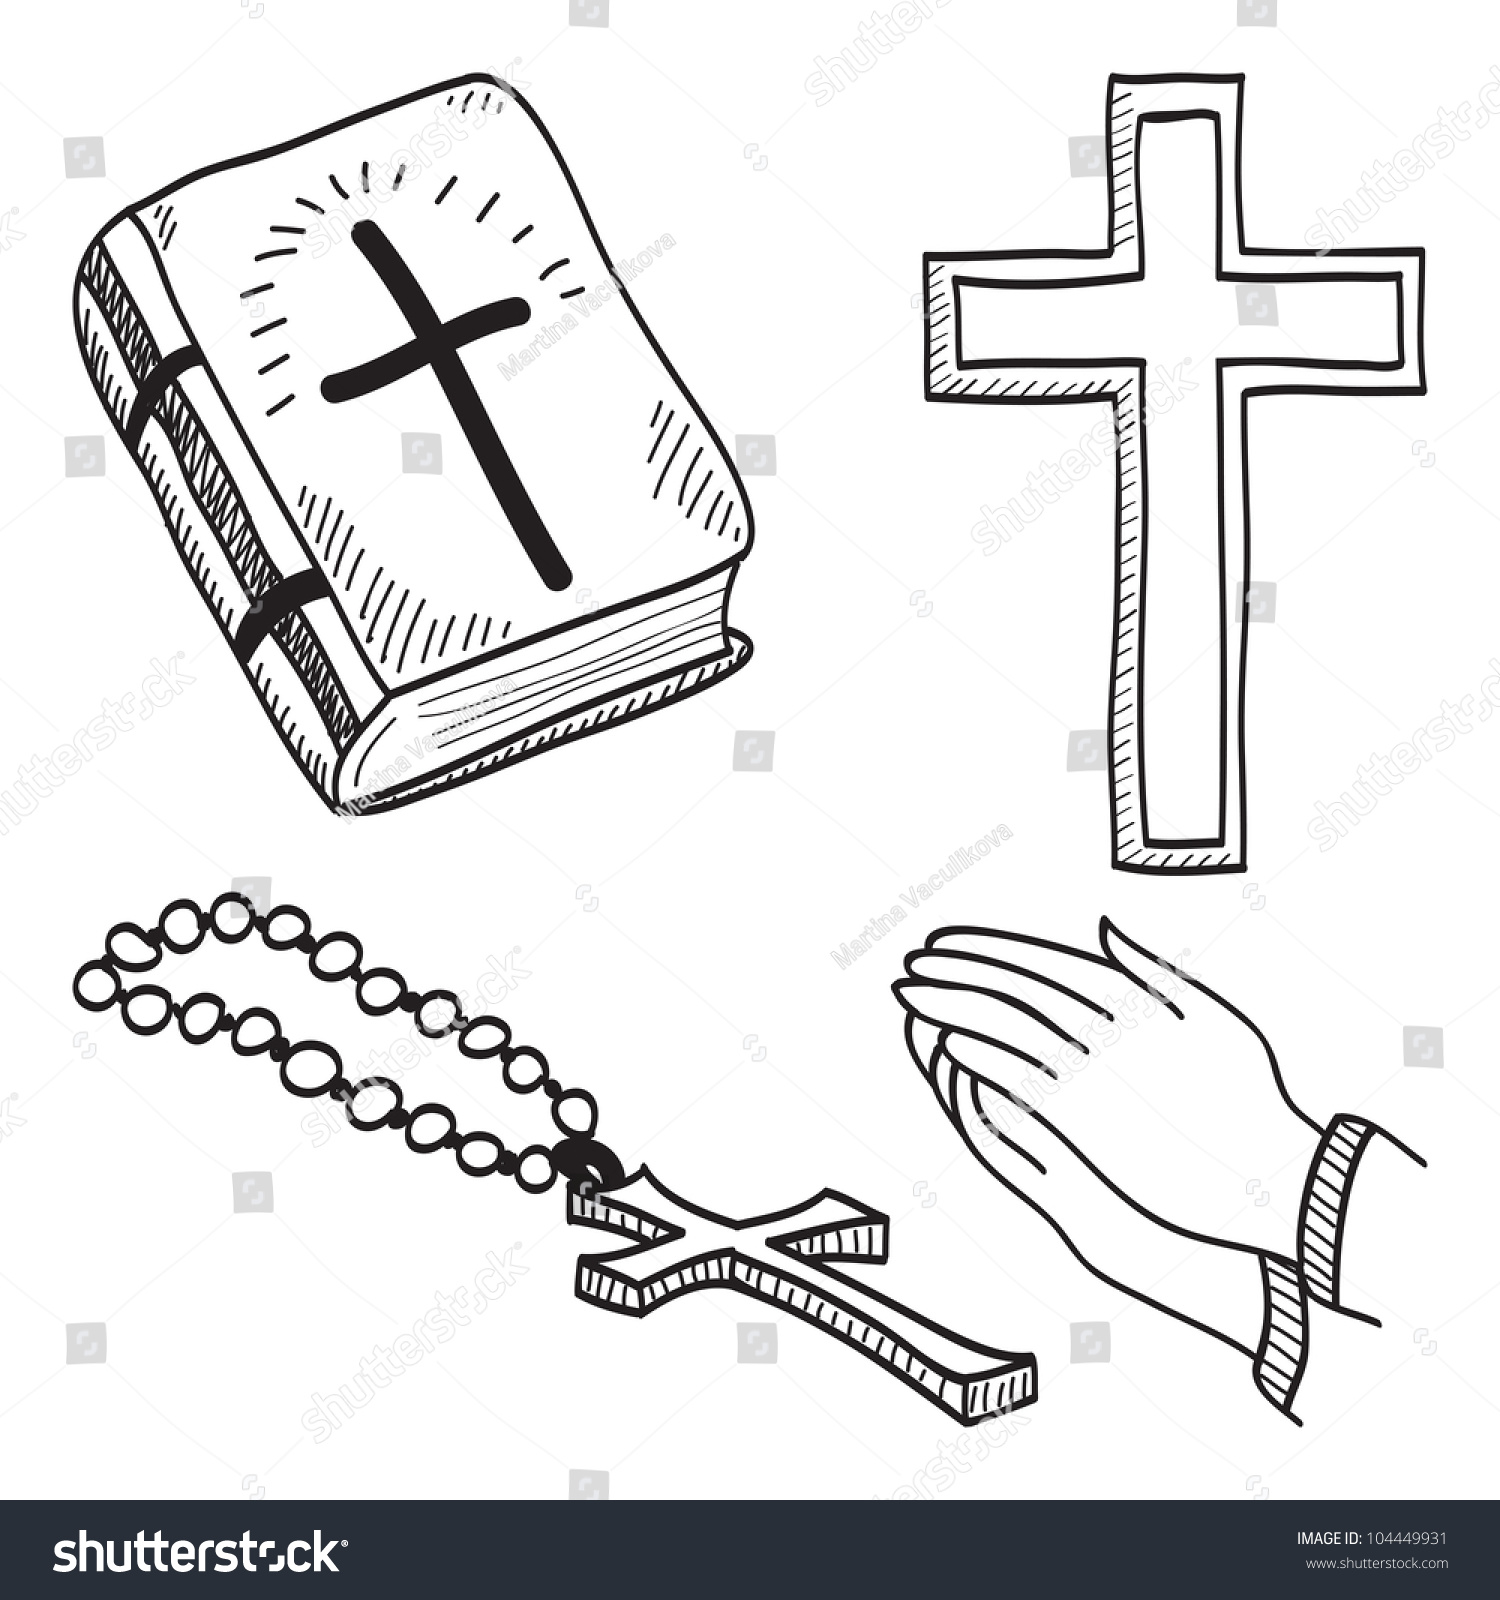 Christian Handdrawn Symbols Illustration Cross Bible Stock Illustration ...